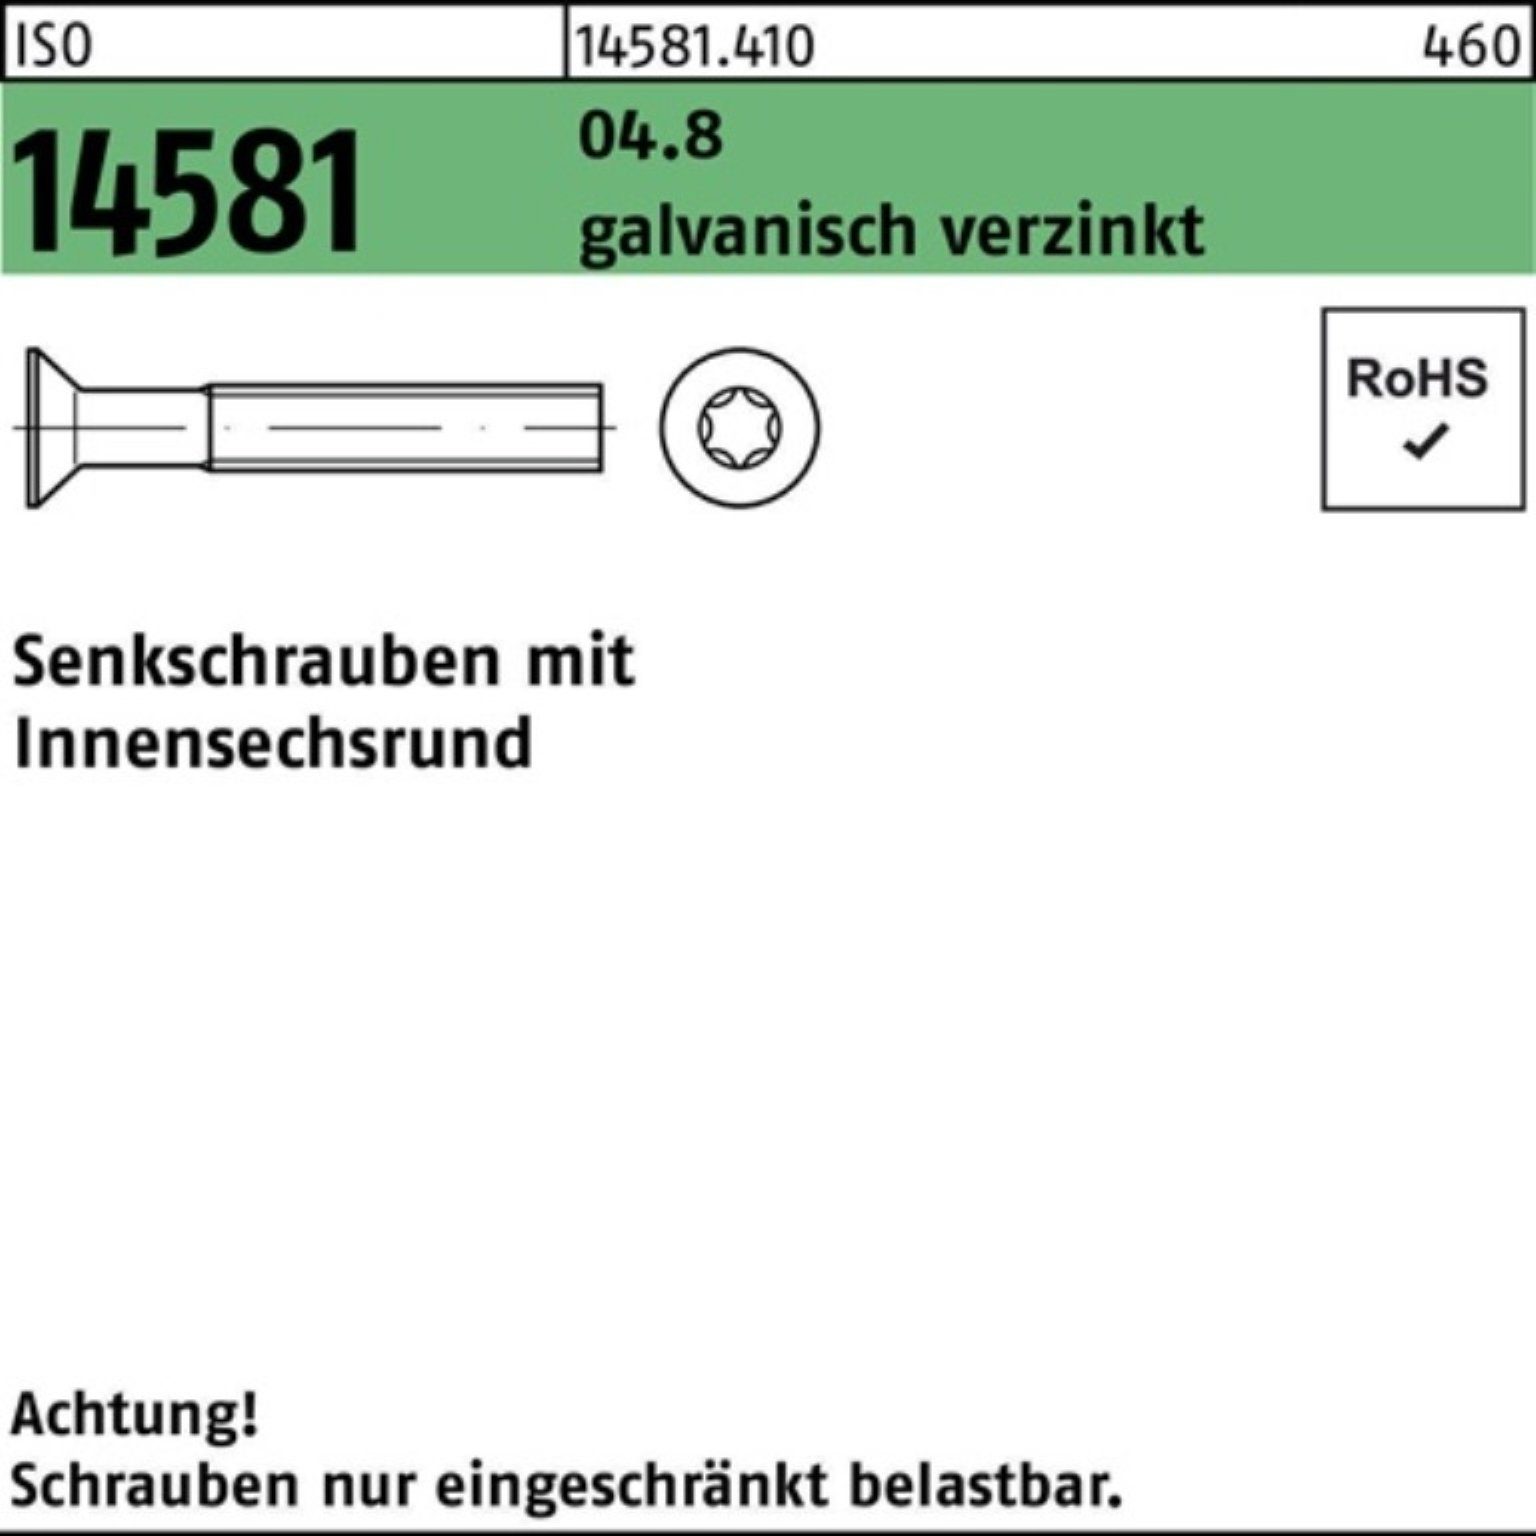 Reyher Senkschraube 2000er T10 Pack Senkschraube galv.verz. 14581 ISO ISR 2000St 04.8 M3x5